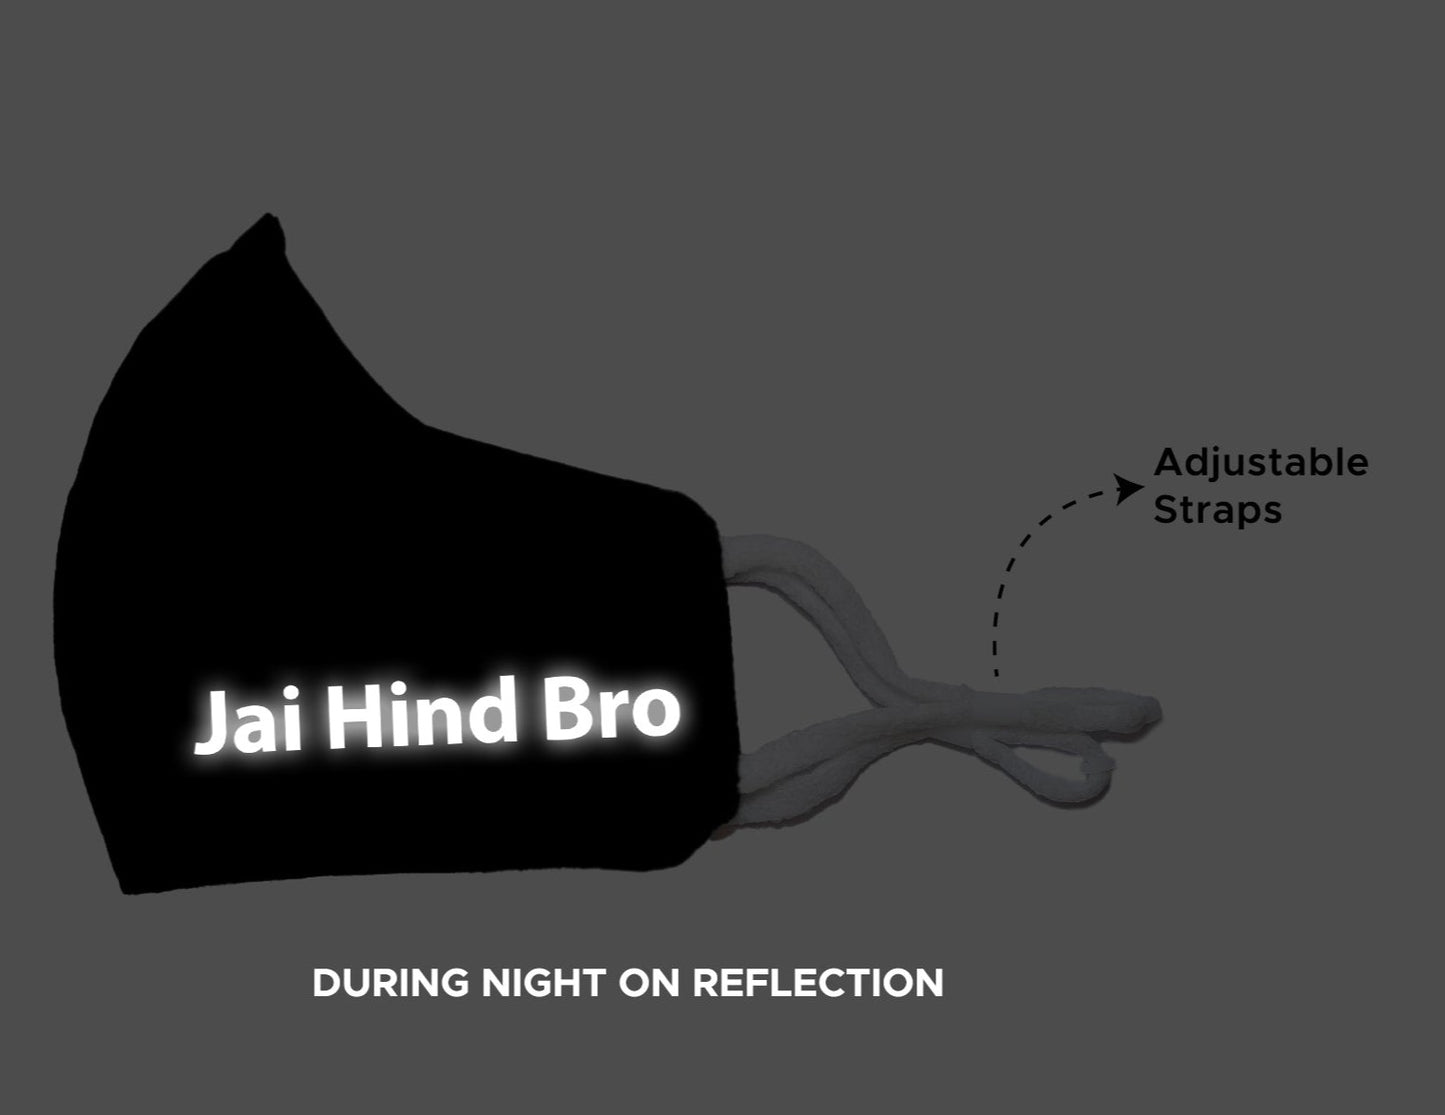 JAI HIND BRO Reflector Mask